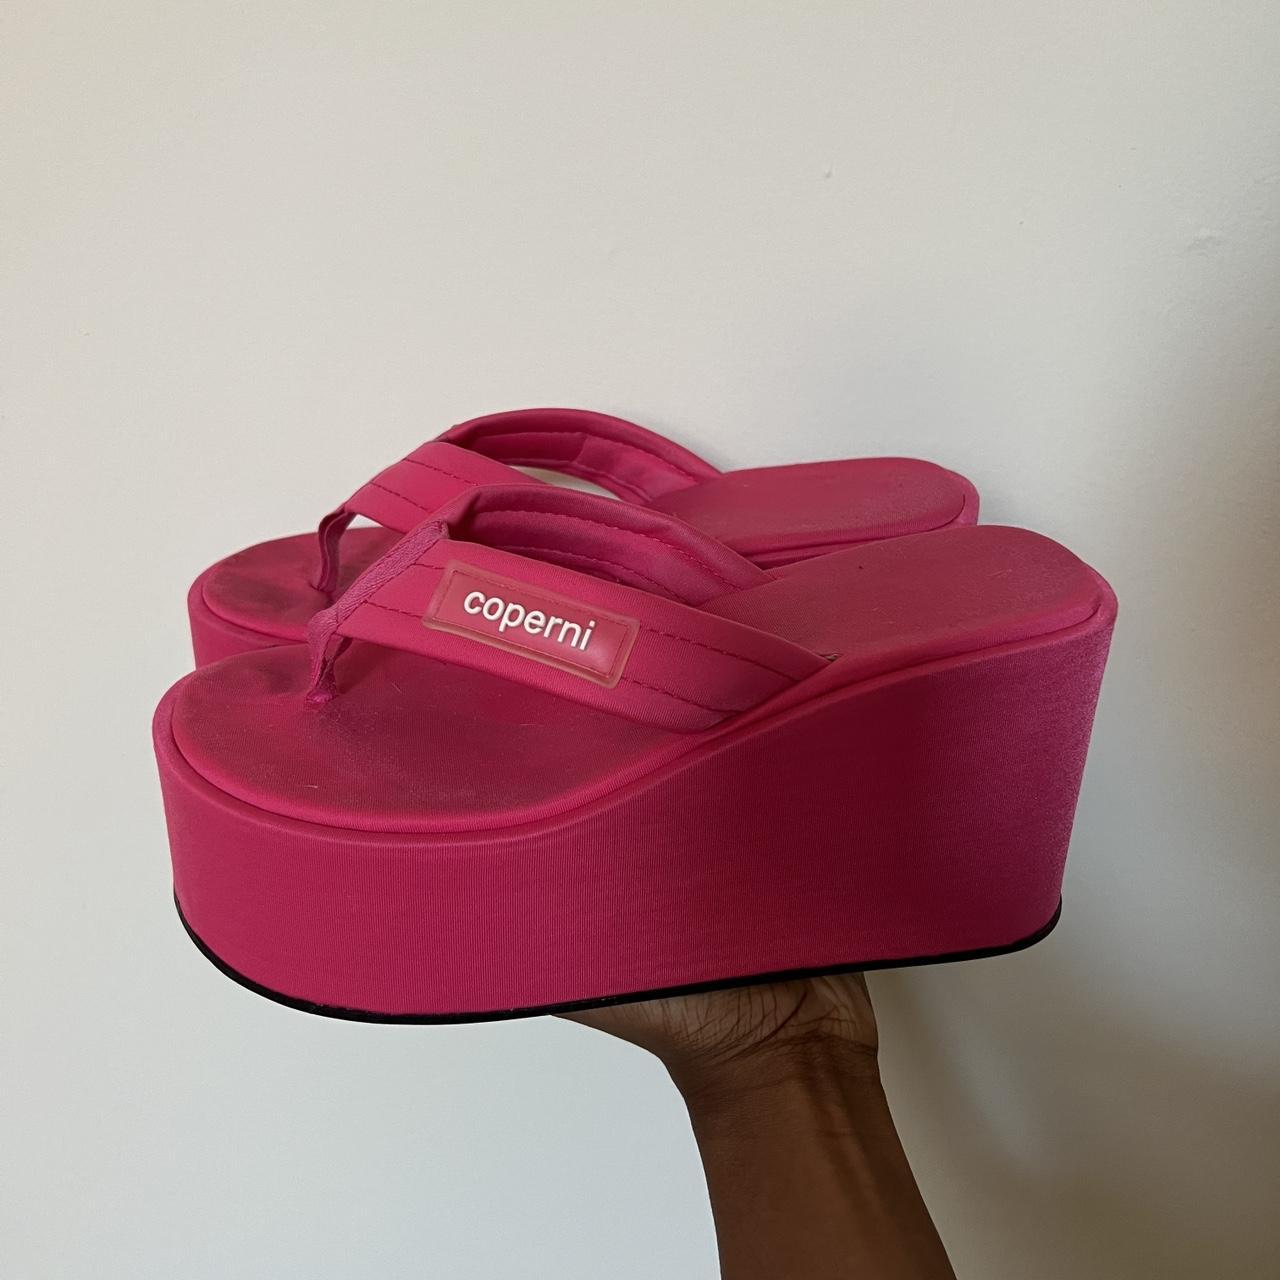 Coperni Women's Pink Slides